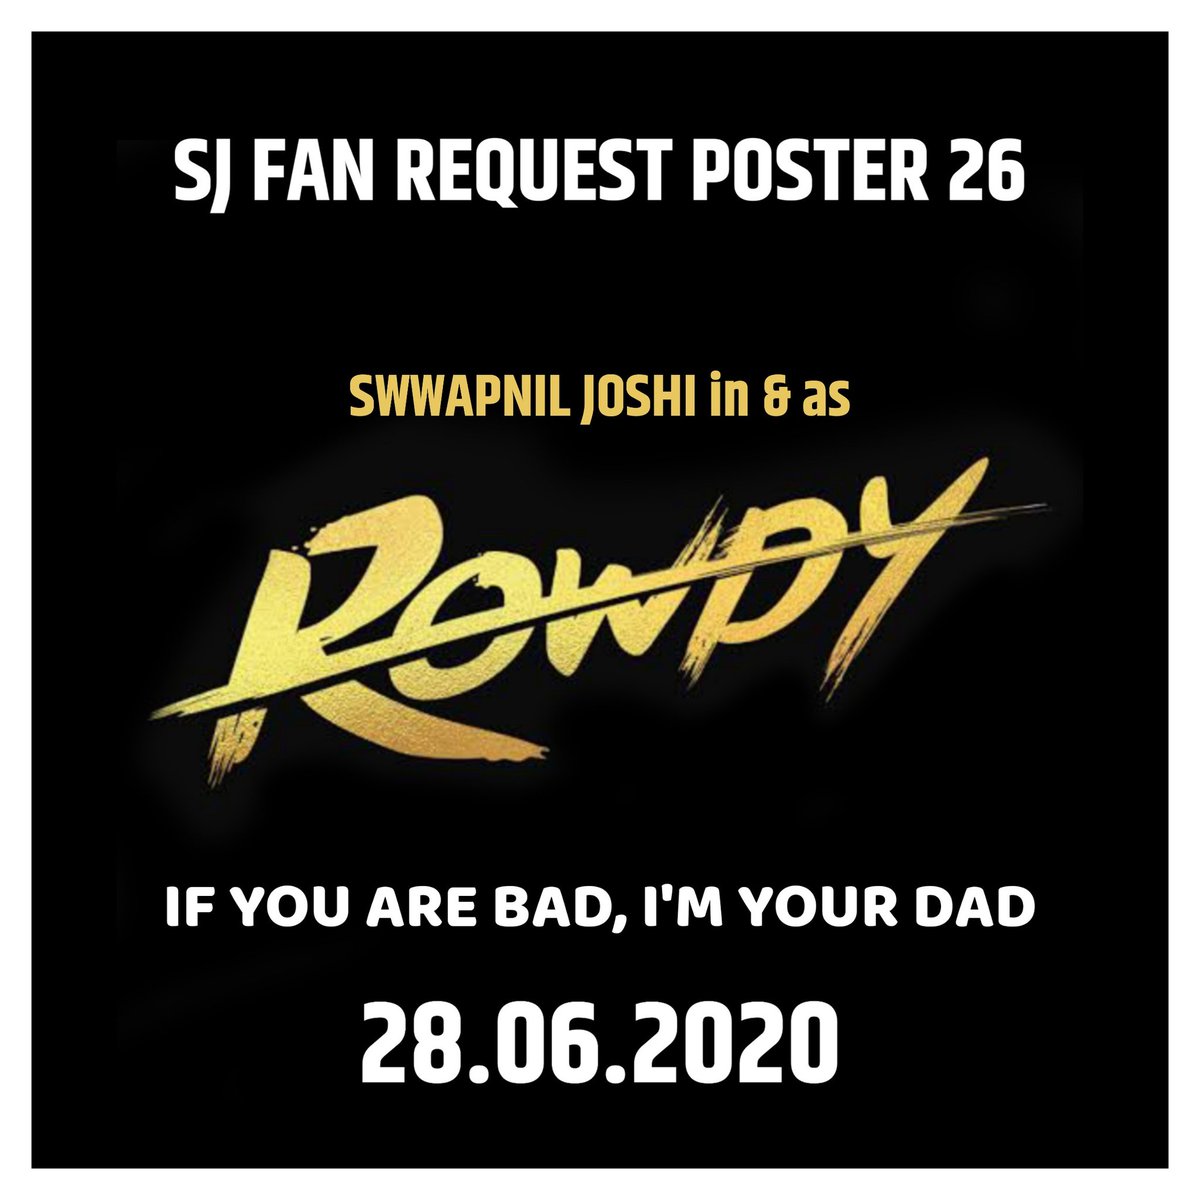 #Rowdy से पंगा लेने पहले 10 बार सोचना..!😎
Presenting #SJFanRequestPoster26 
Ft. Superstar @swwapniljoshi in & as #Rowdy 
Poster requested by @shweta_berde 🥰🥰

(If you are bad.... 😉😉
#ThisSunday #28June2020 

It's your boy @DaniishShaikh 🤘
#DsKaEdit | #Superstar | #DanishFC